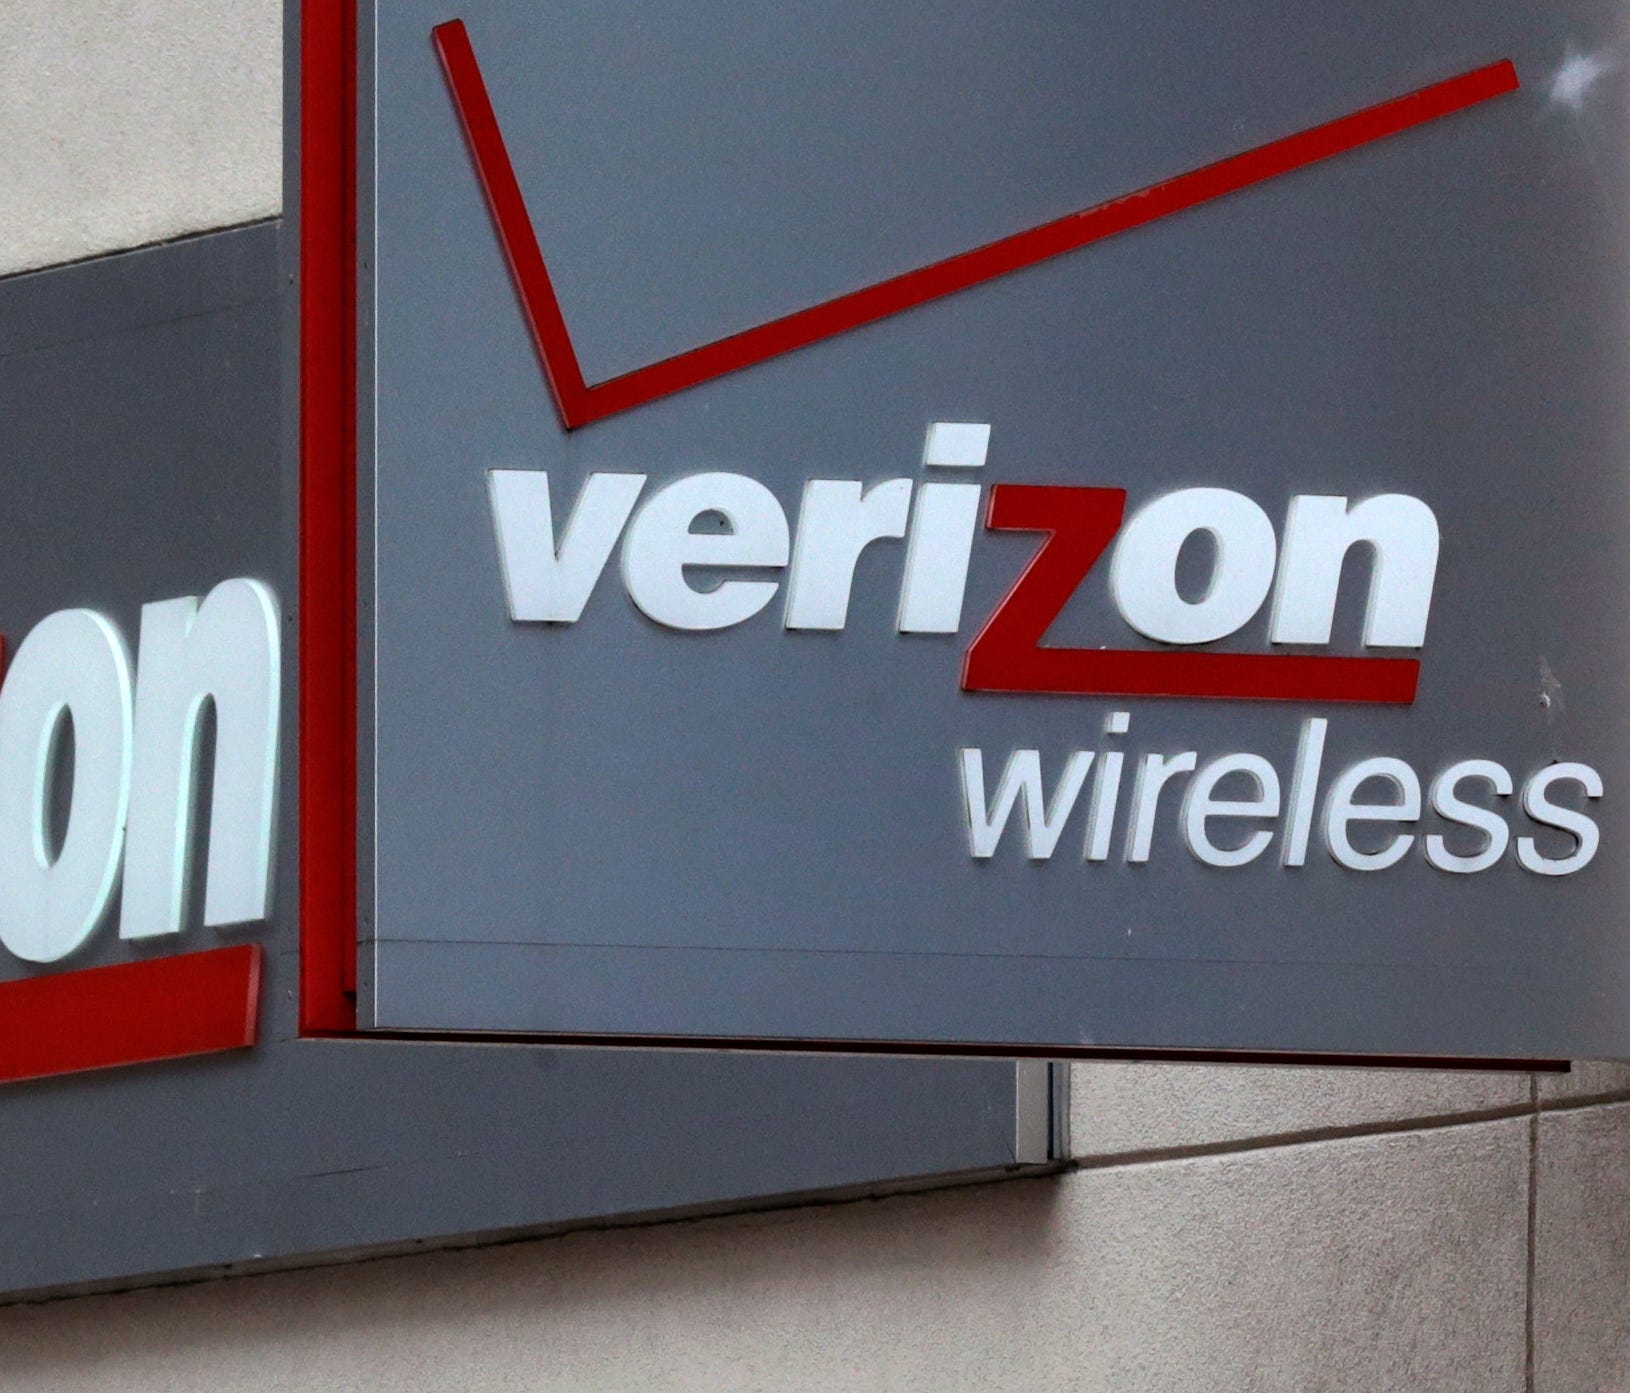 Verizon customers noticed last week that video bandwidth was capped at 10mbs.